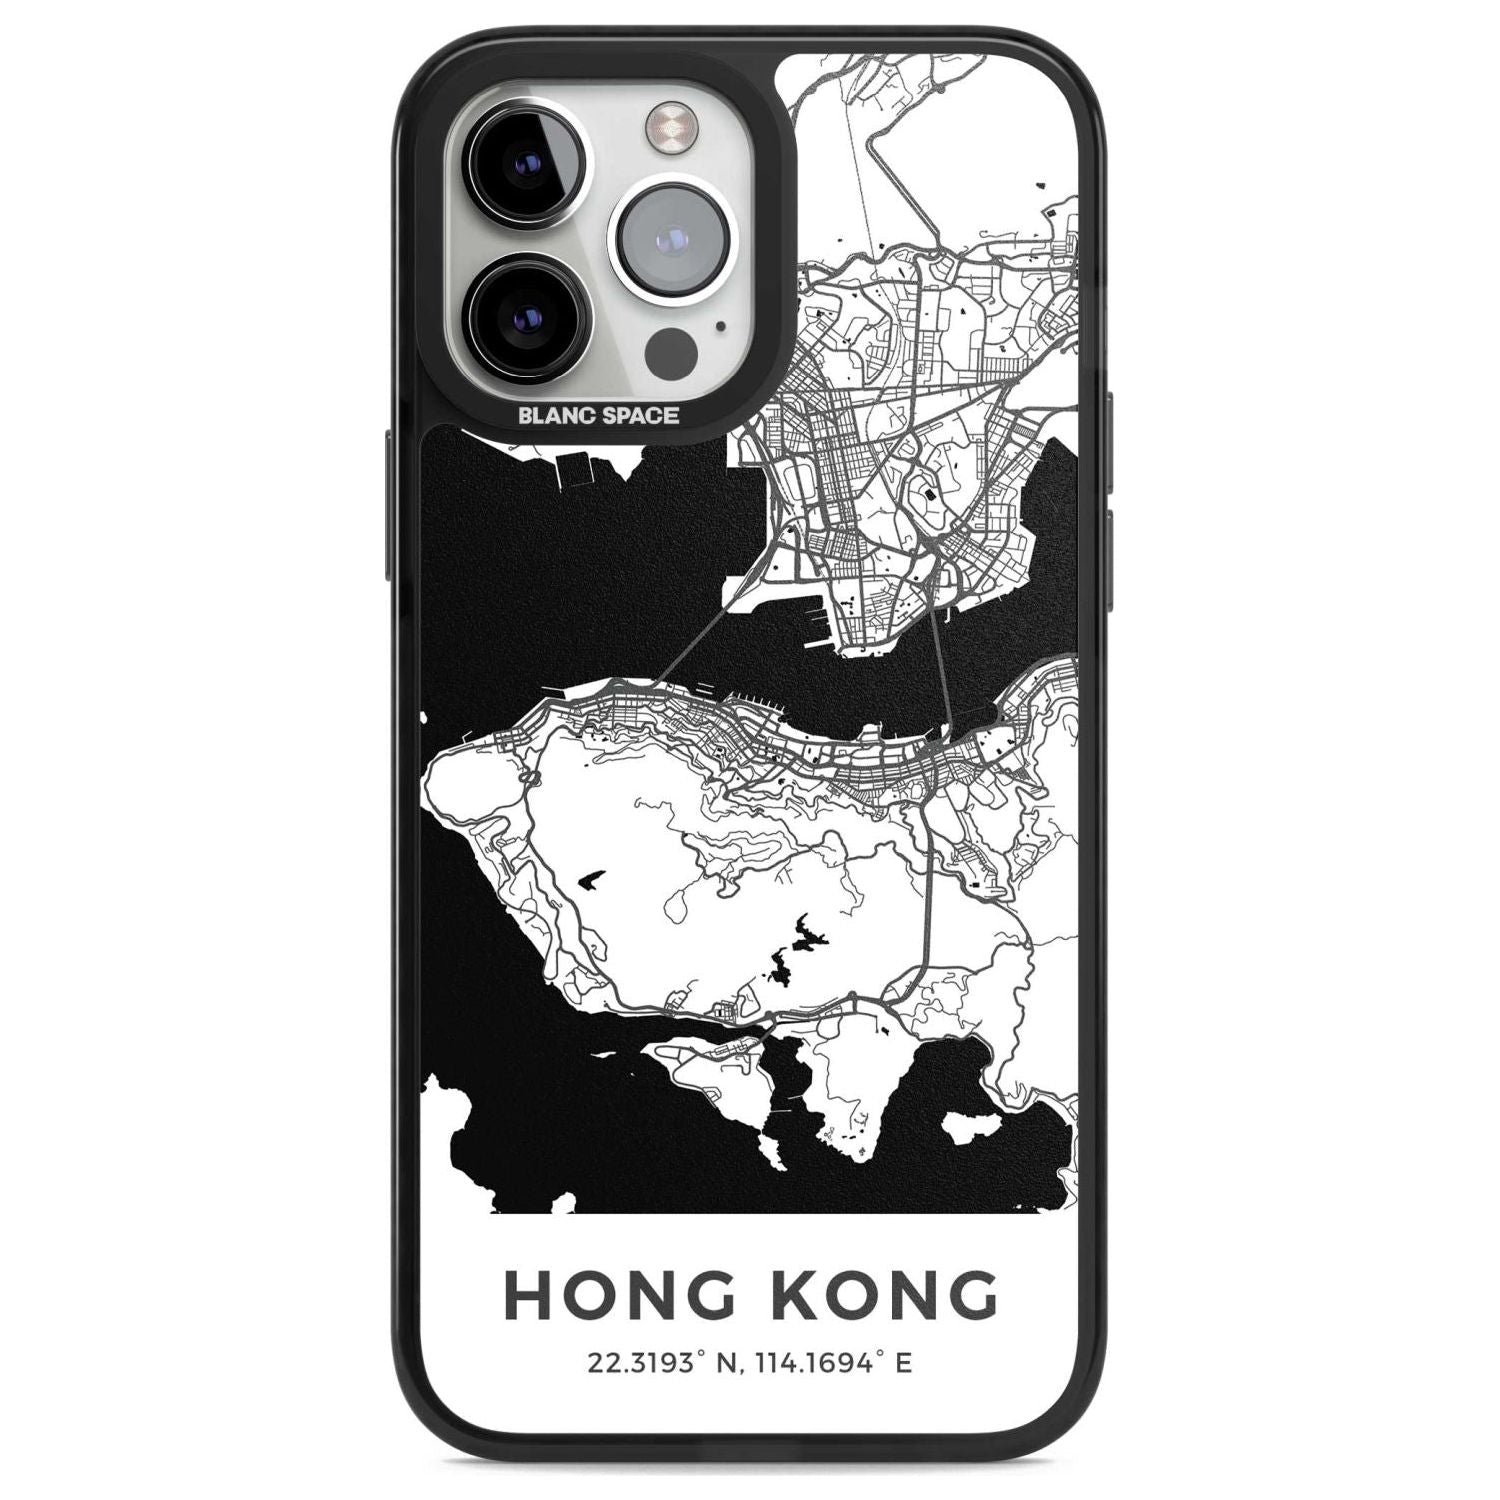 Map of Hong Kong Phone Case iPhone 13 Pro Max / Magsafe Black Impact Case Blanc Space